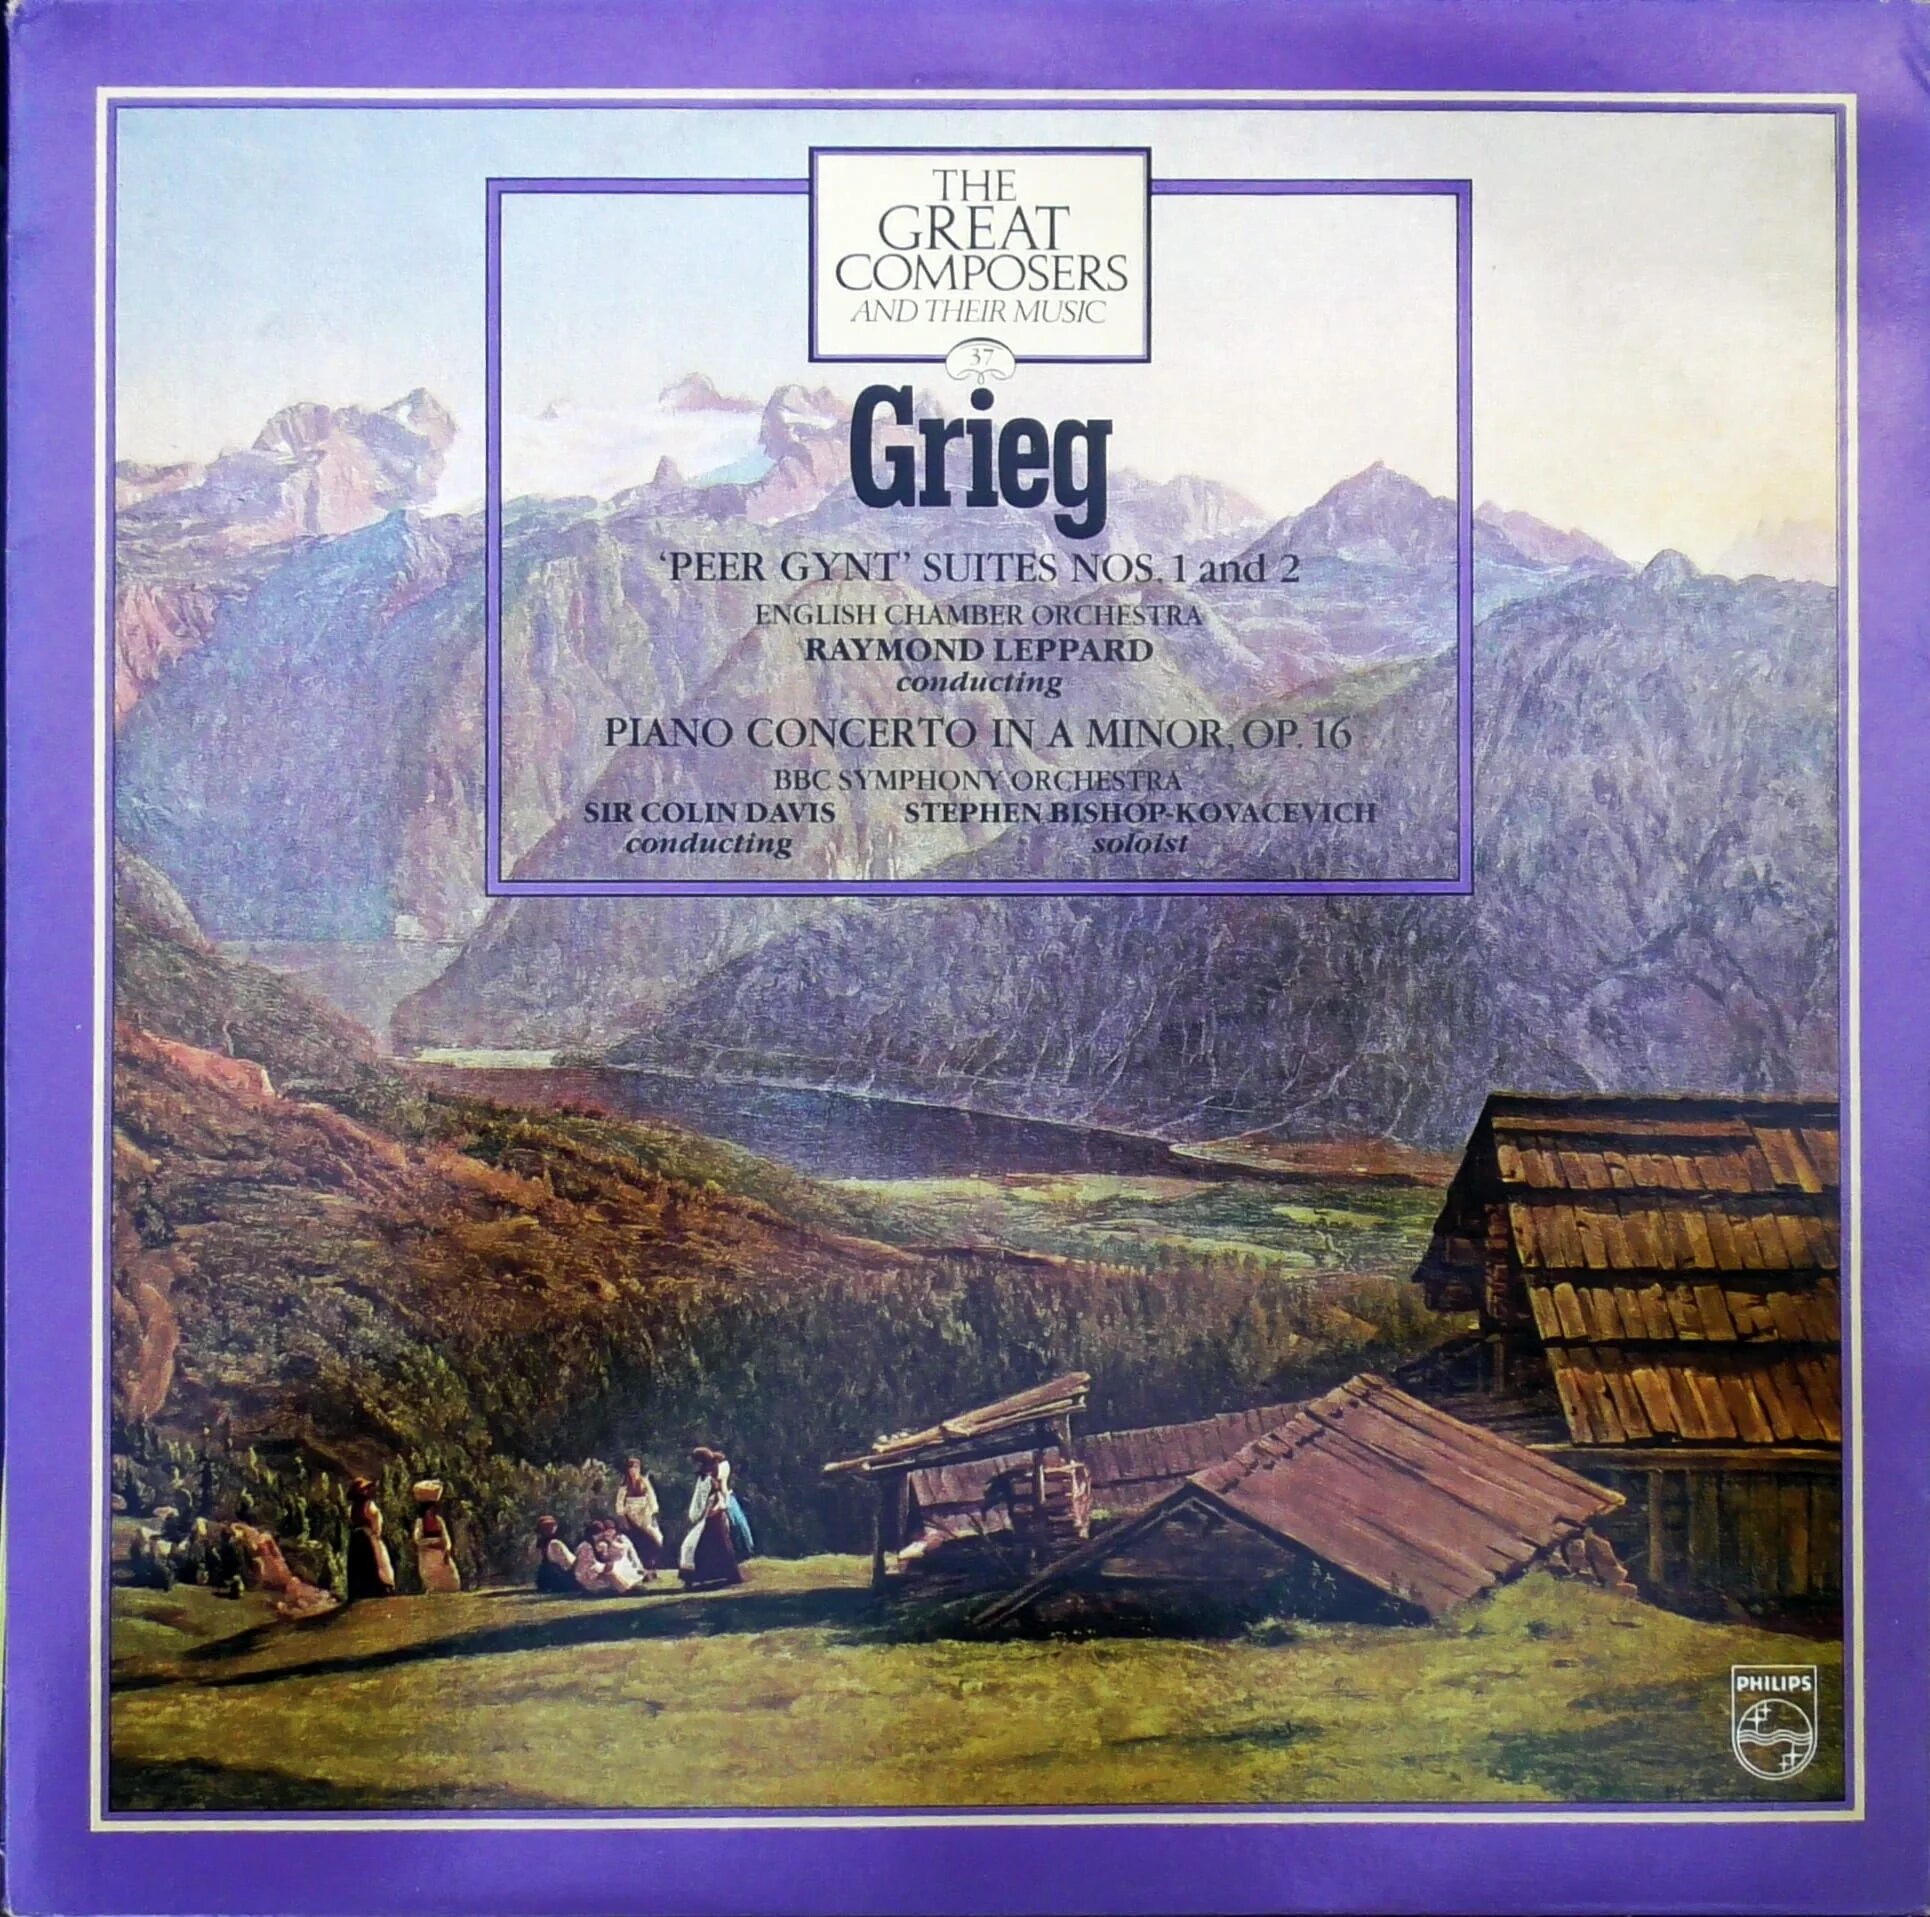 Edvard Grieg - Piano Concerto in a Minor, op. 16. Edvard Grieg Suites обложки. Edvard Grieg - Piano Concerto. 2009. Edvard.Grieg-Romantic.Classic.2001.